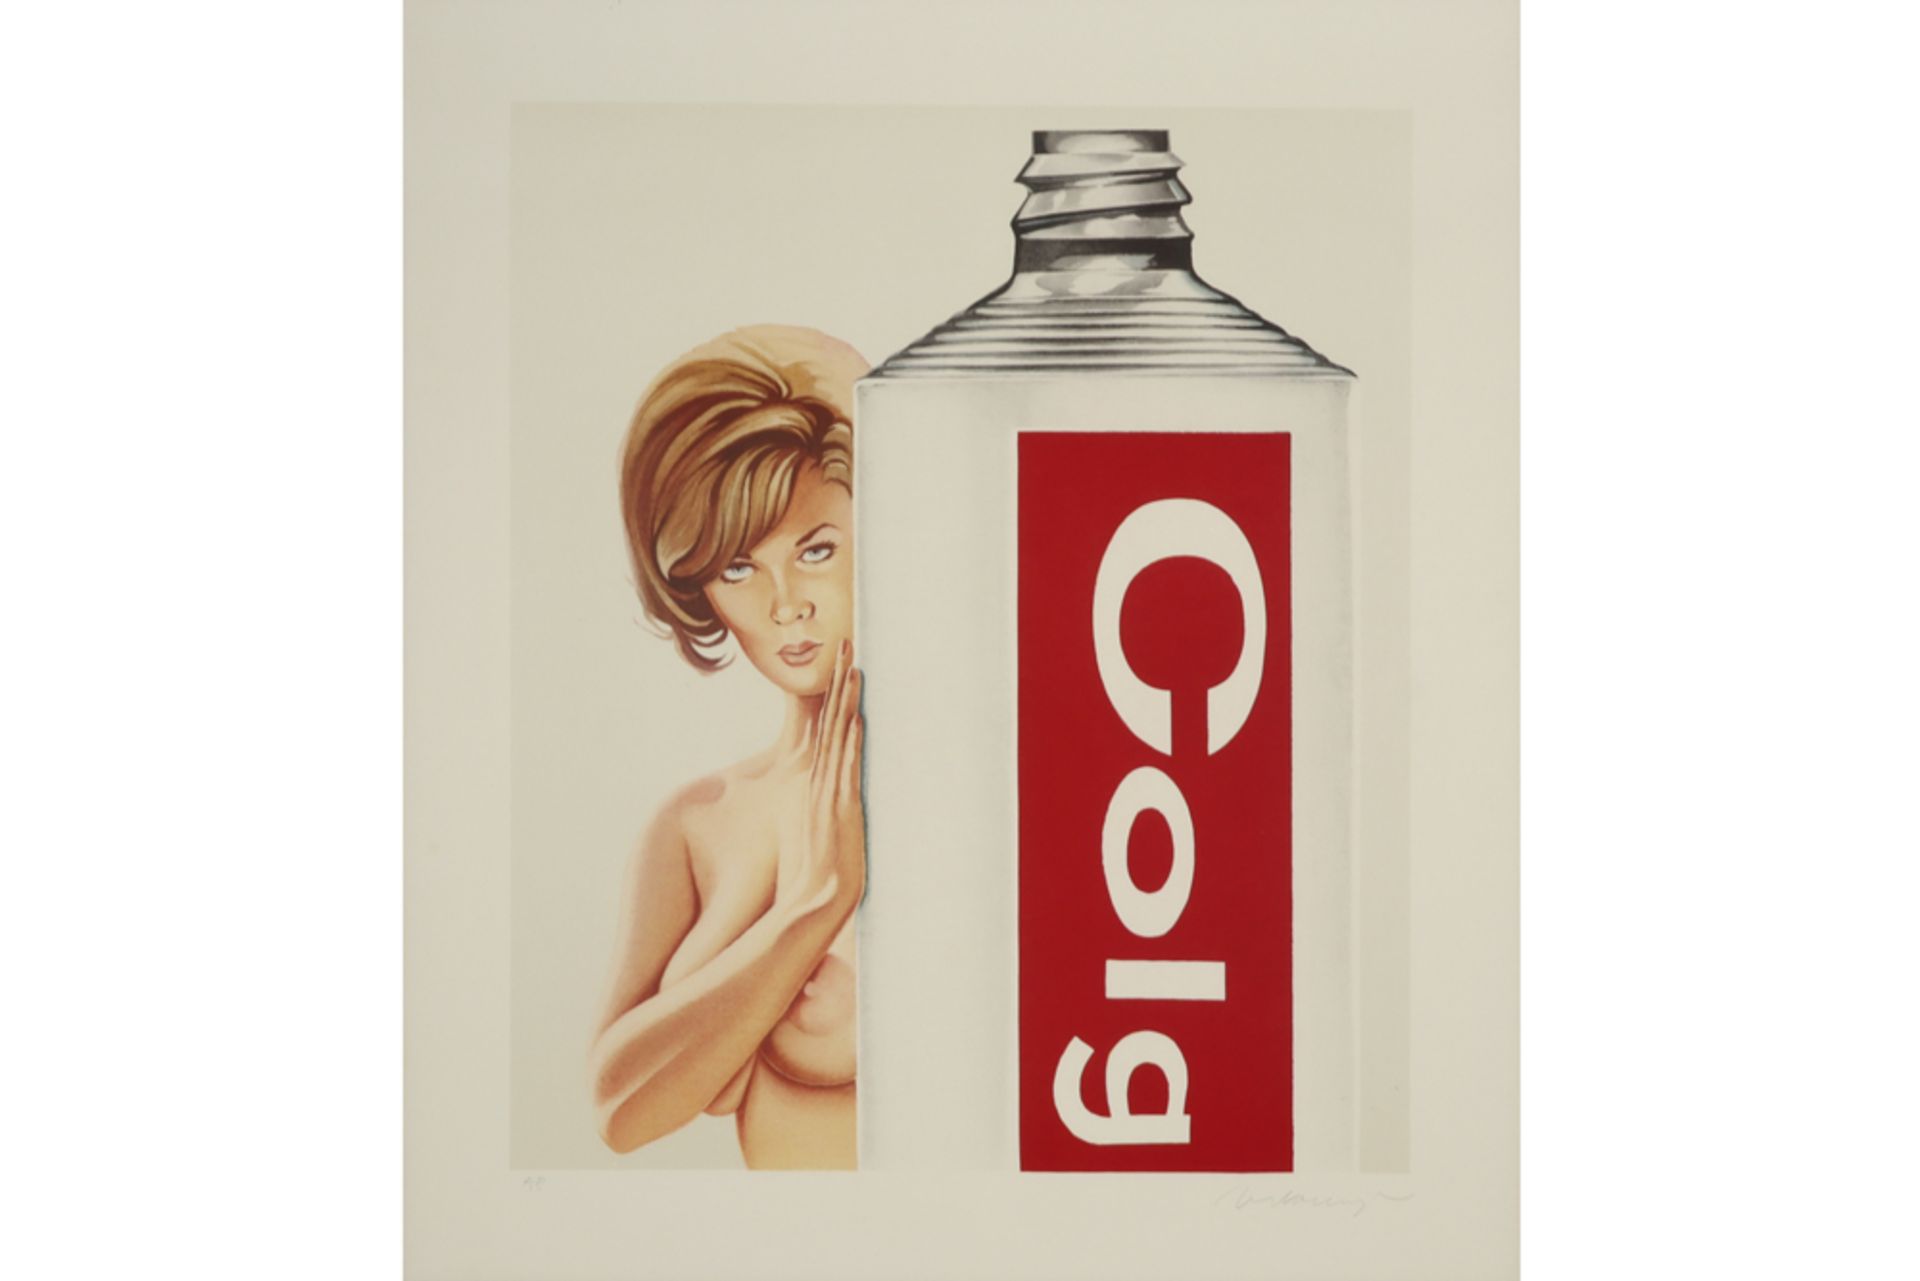 Mel Ramos signed typical Pop Art "Colgate" "AP" print in colors || MEL RAMOS (1935 - 2018) print